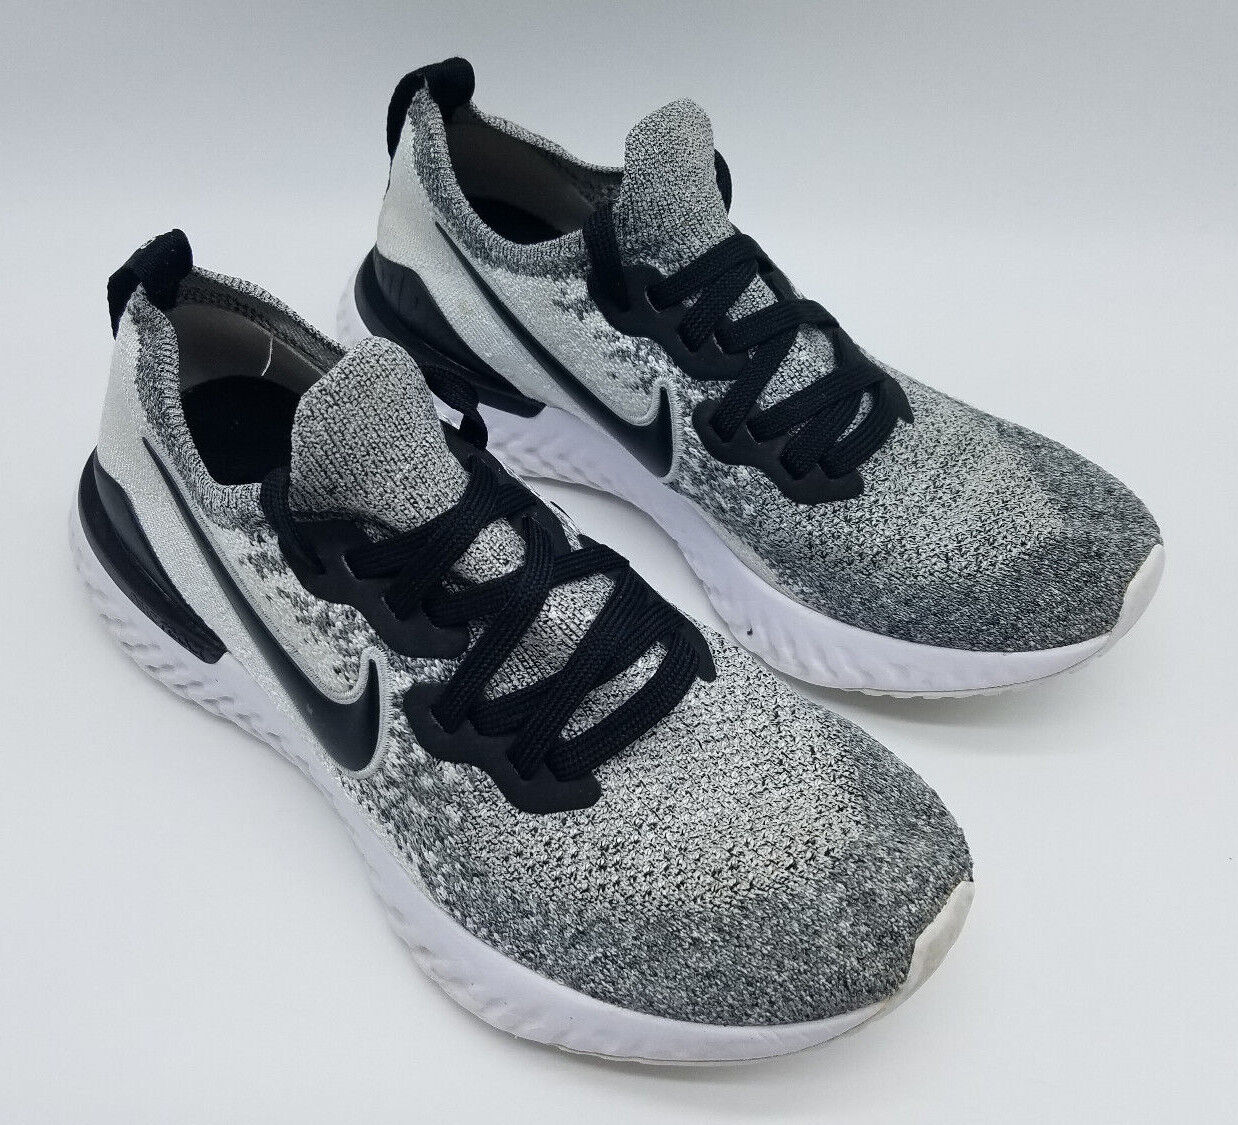 Nike Epic React Flyknit 2 Women's Running Shoes Size 7.5 Gray Black